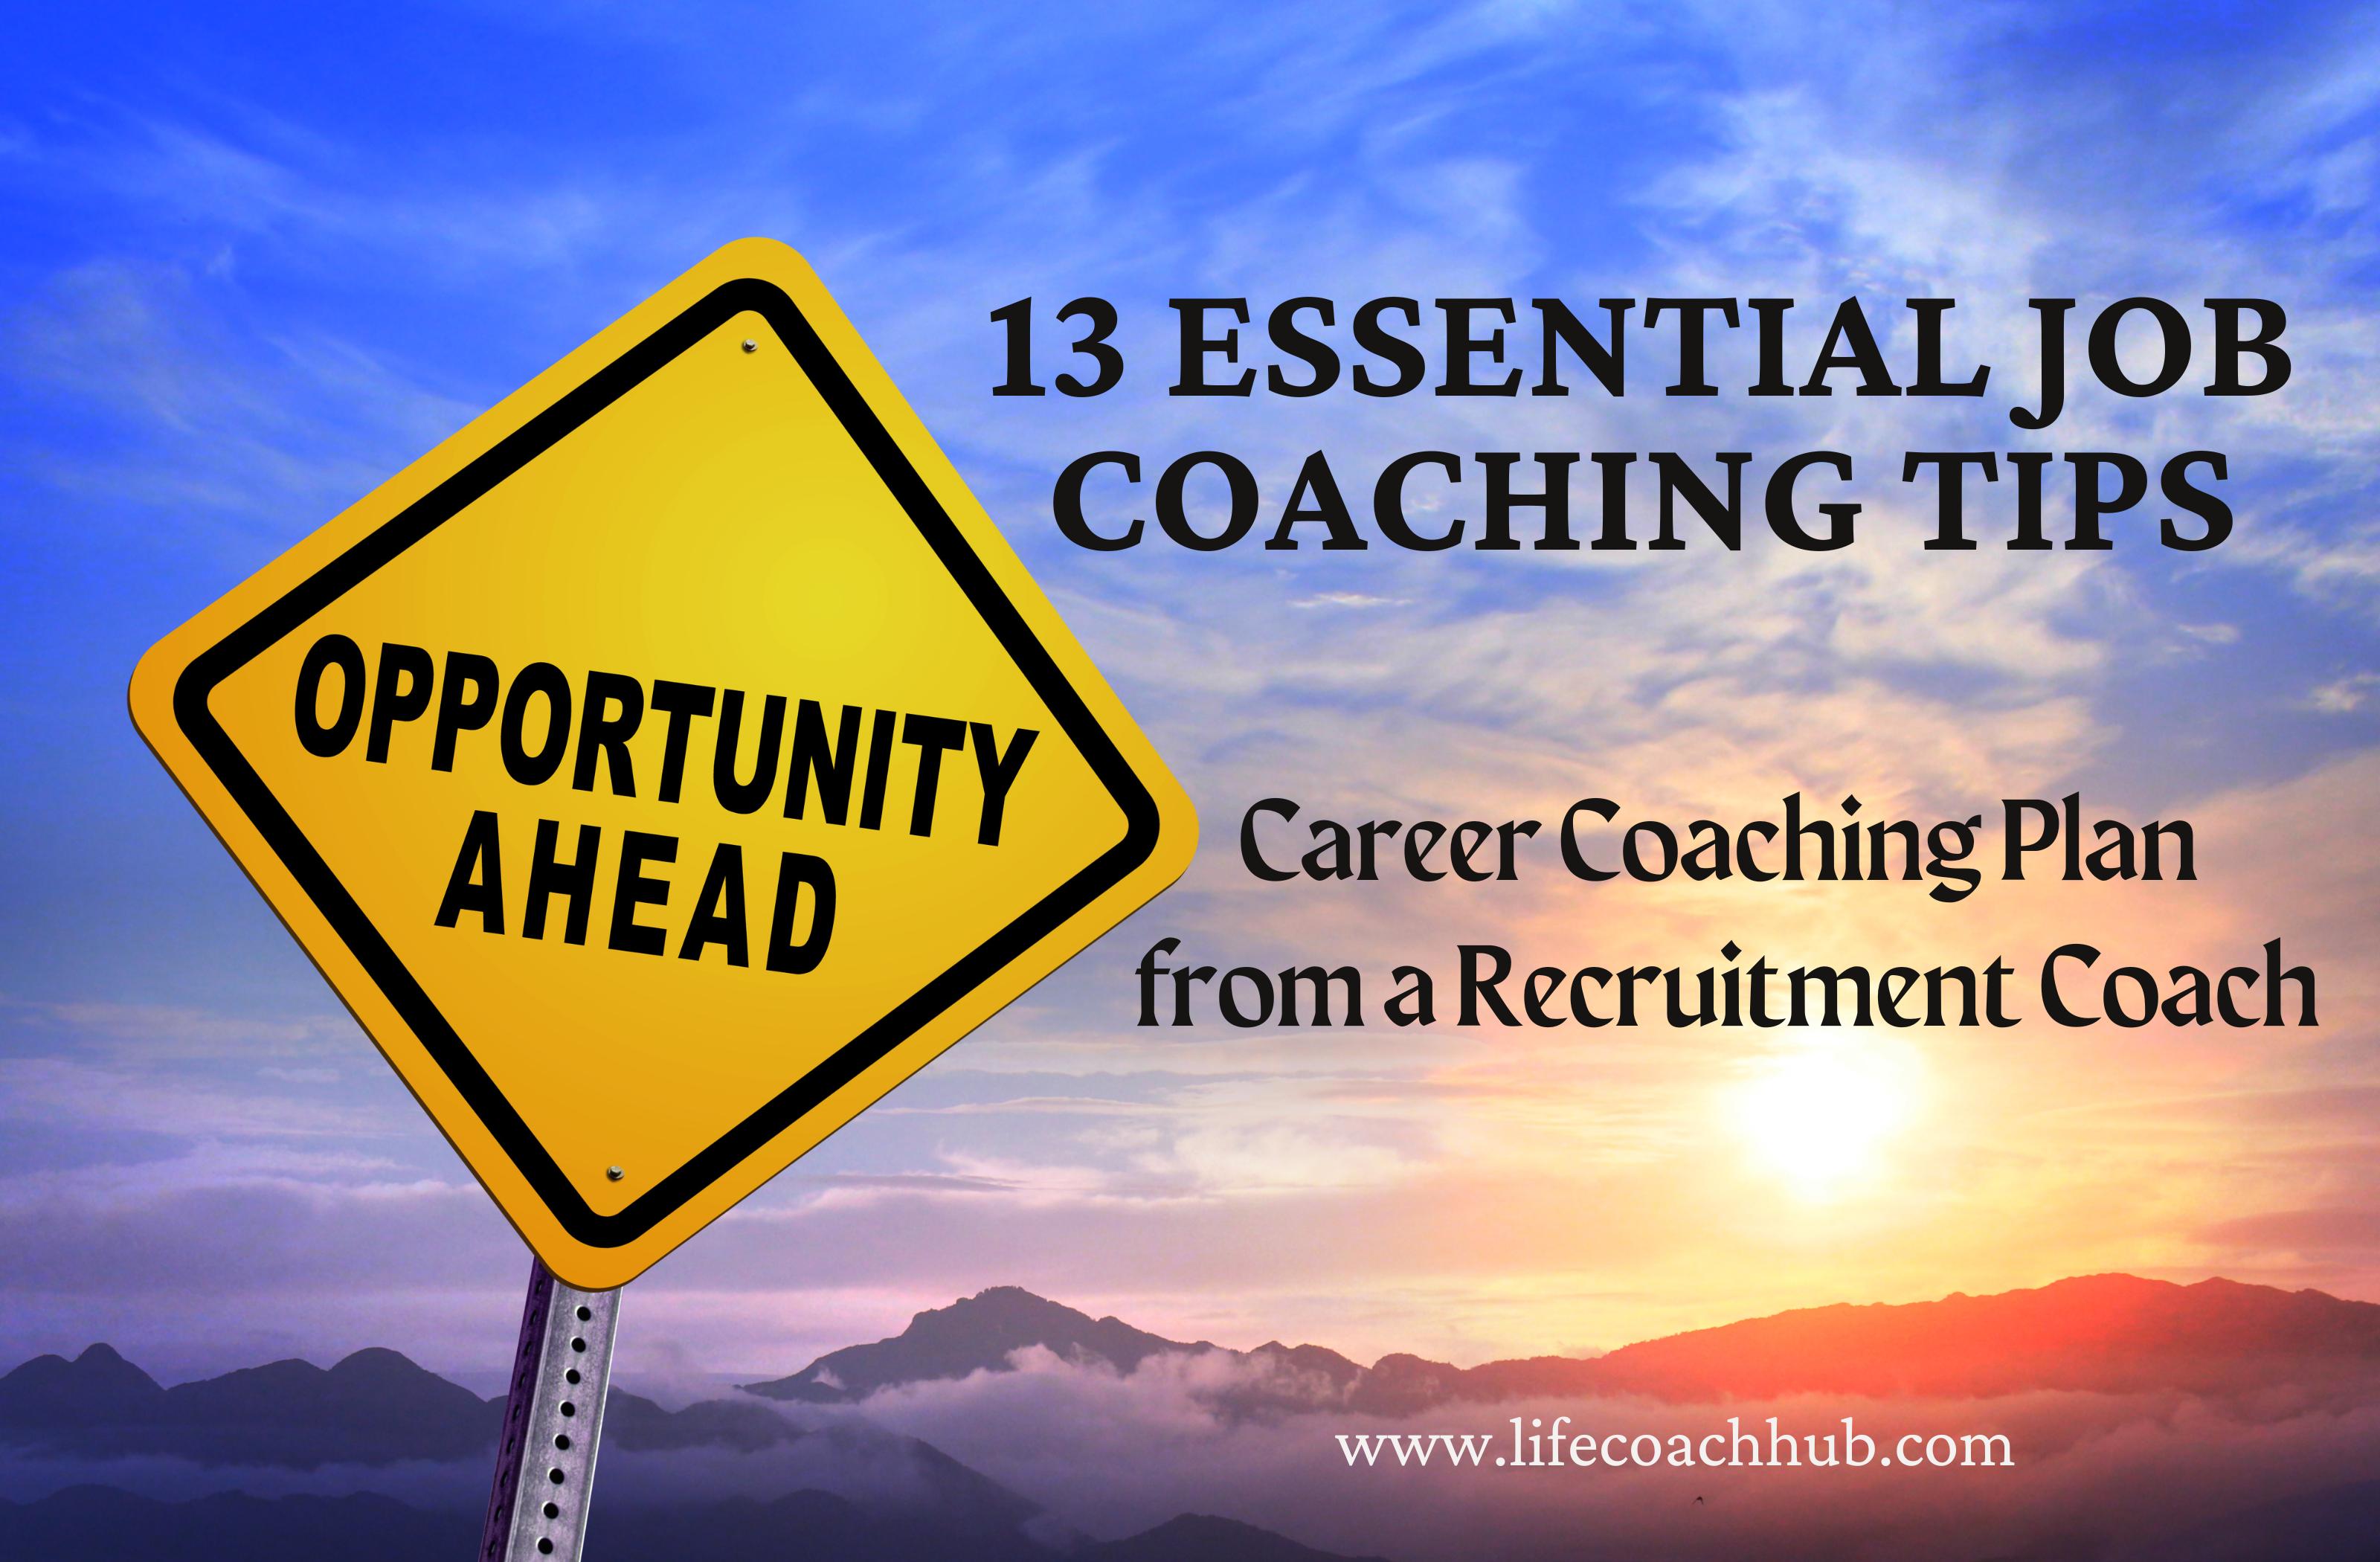 13 Essential Job Coaching Tips: Career Coaching Plan from a Recruitment Coach